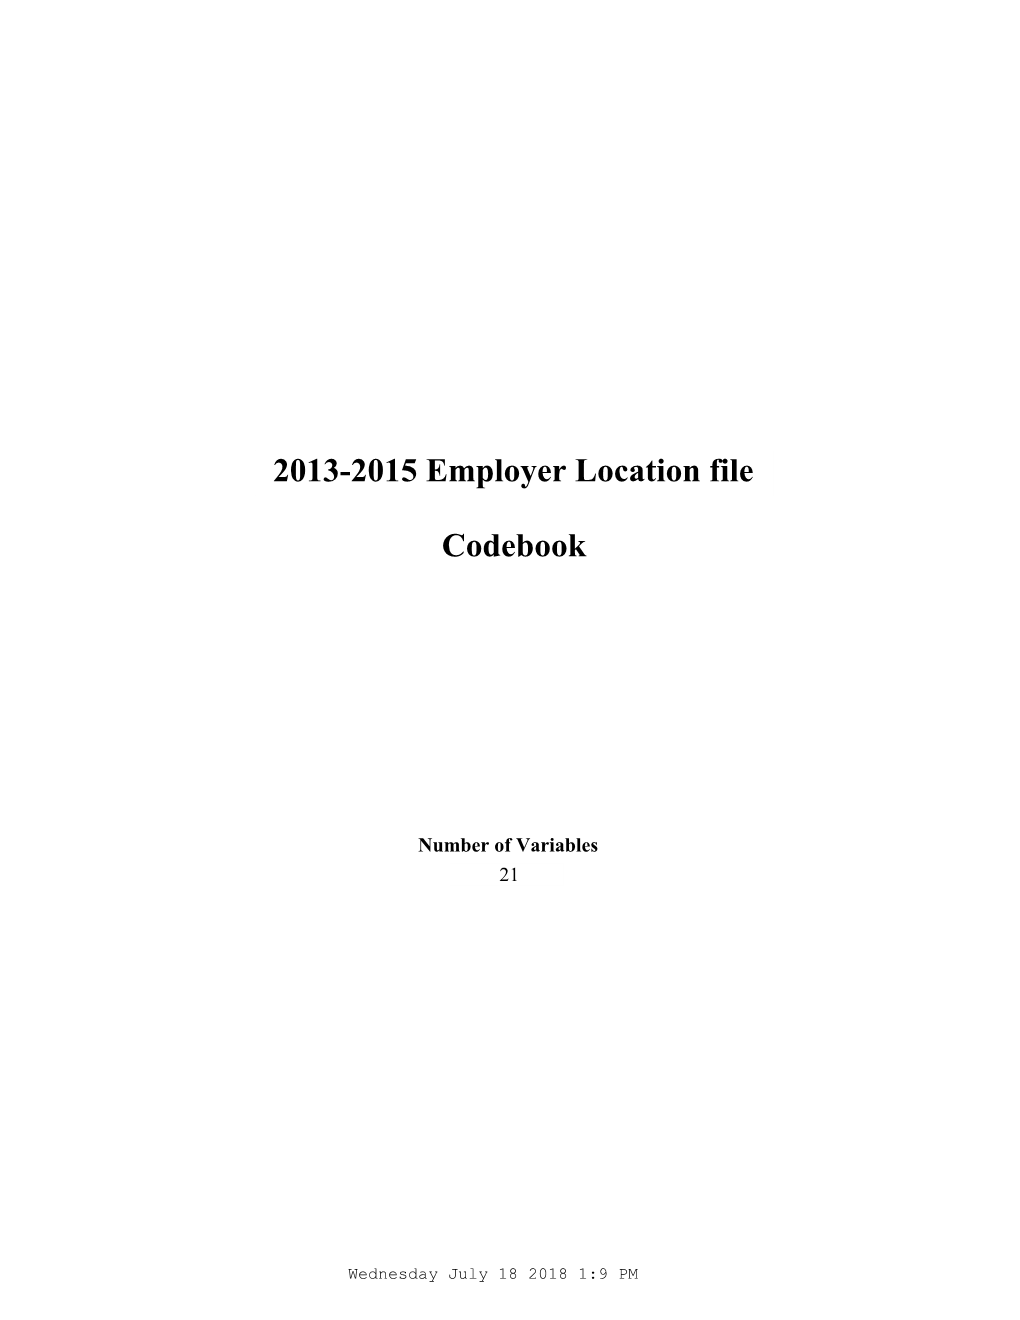 Codebook 2013-2015 Employer Location File